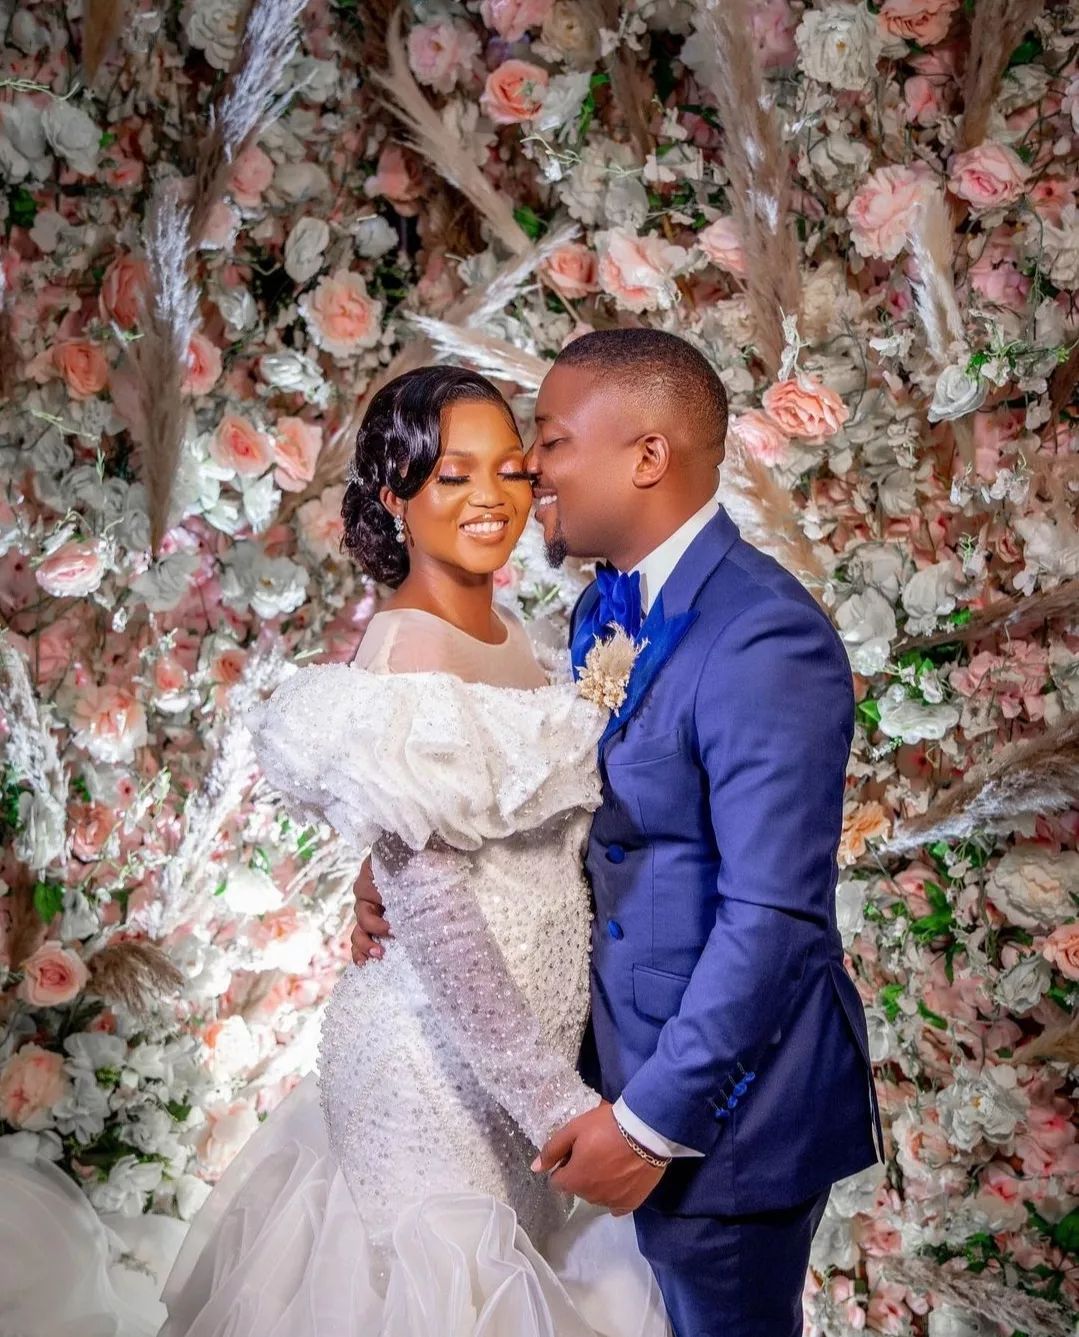 Oluwagbemisola And Oluwafunminiyi's White Wedding Was An Expression Of Love